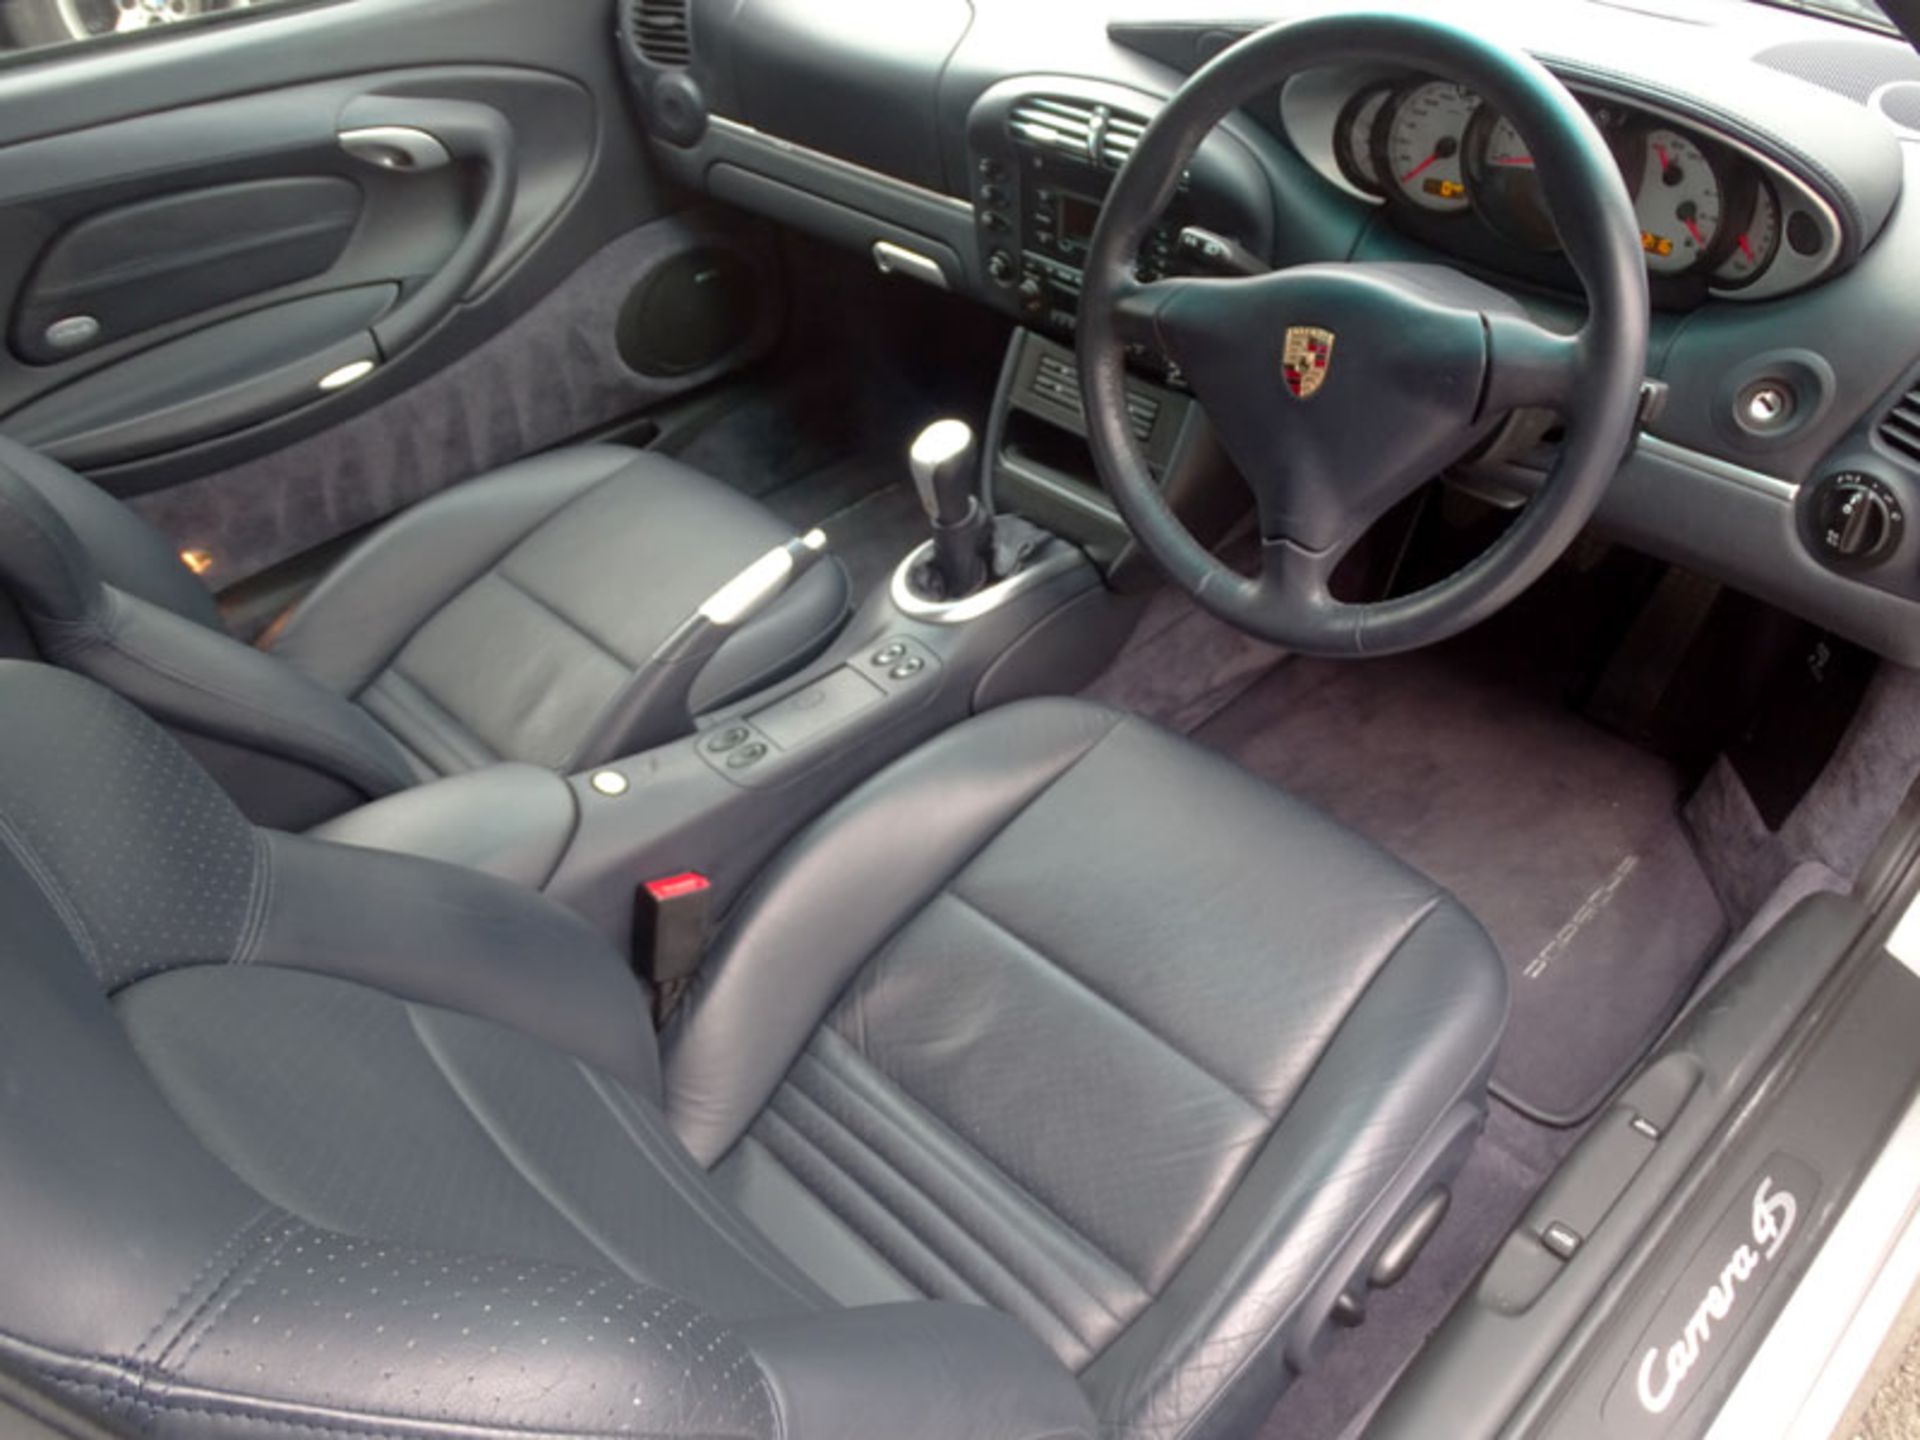 2004 Porsche 911 Carrera 4S - Image 4 of 7